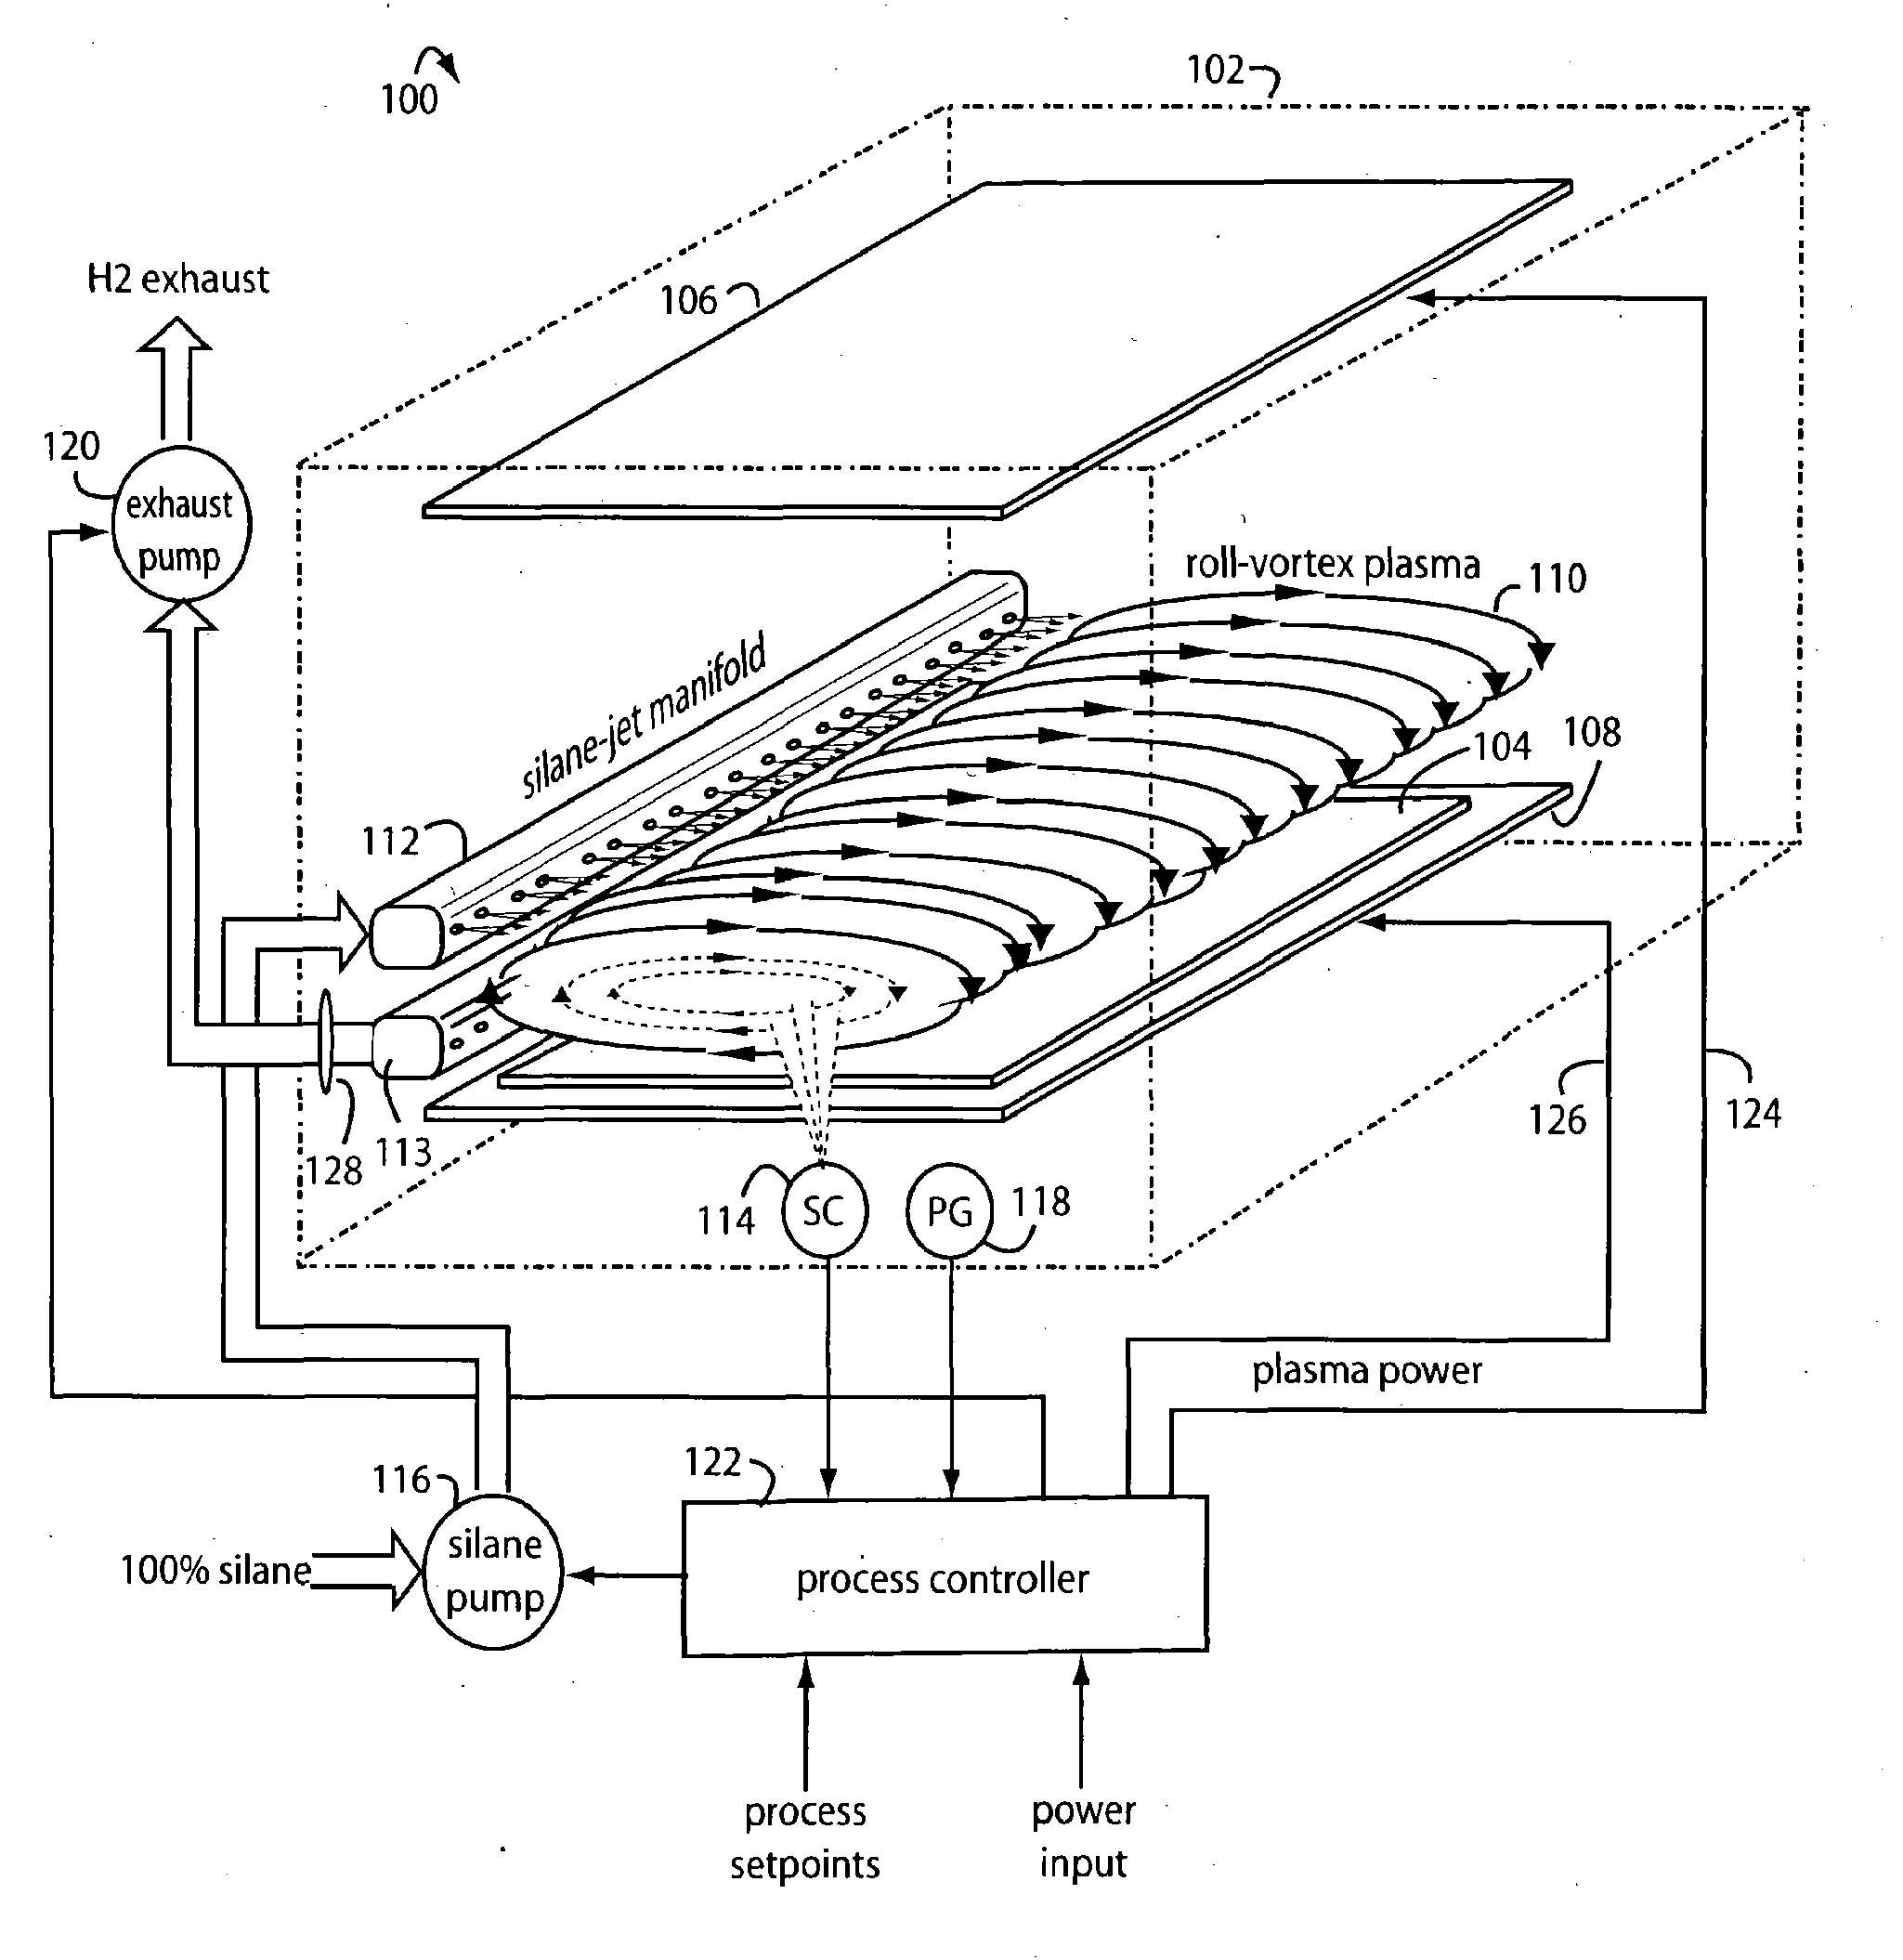 Roll-vortex plasma chemical vapor deposition system